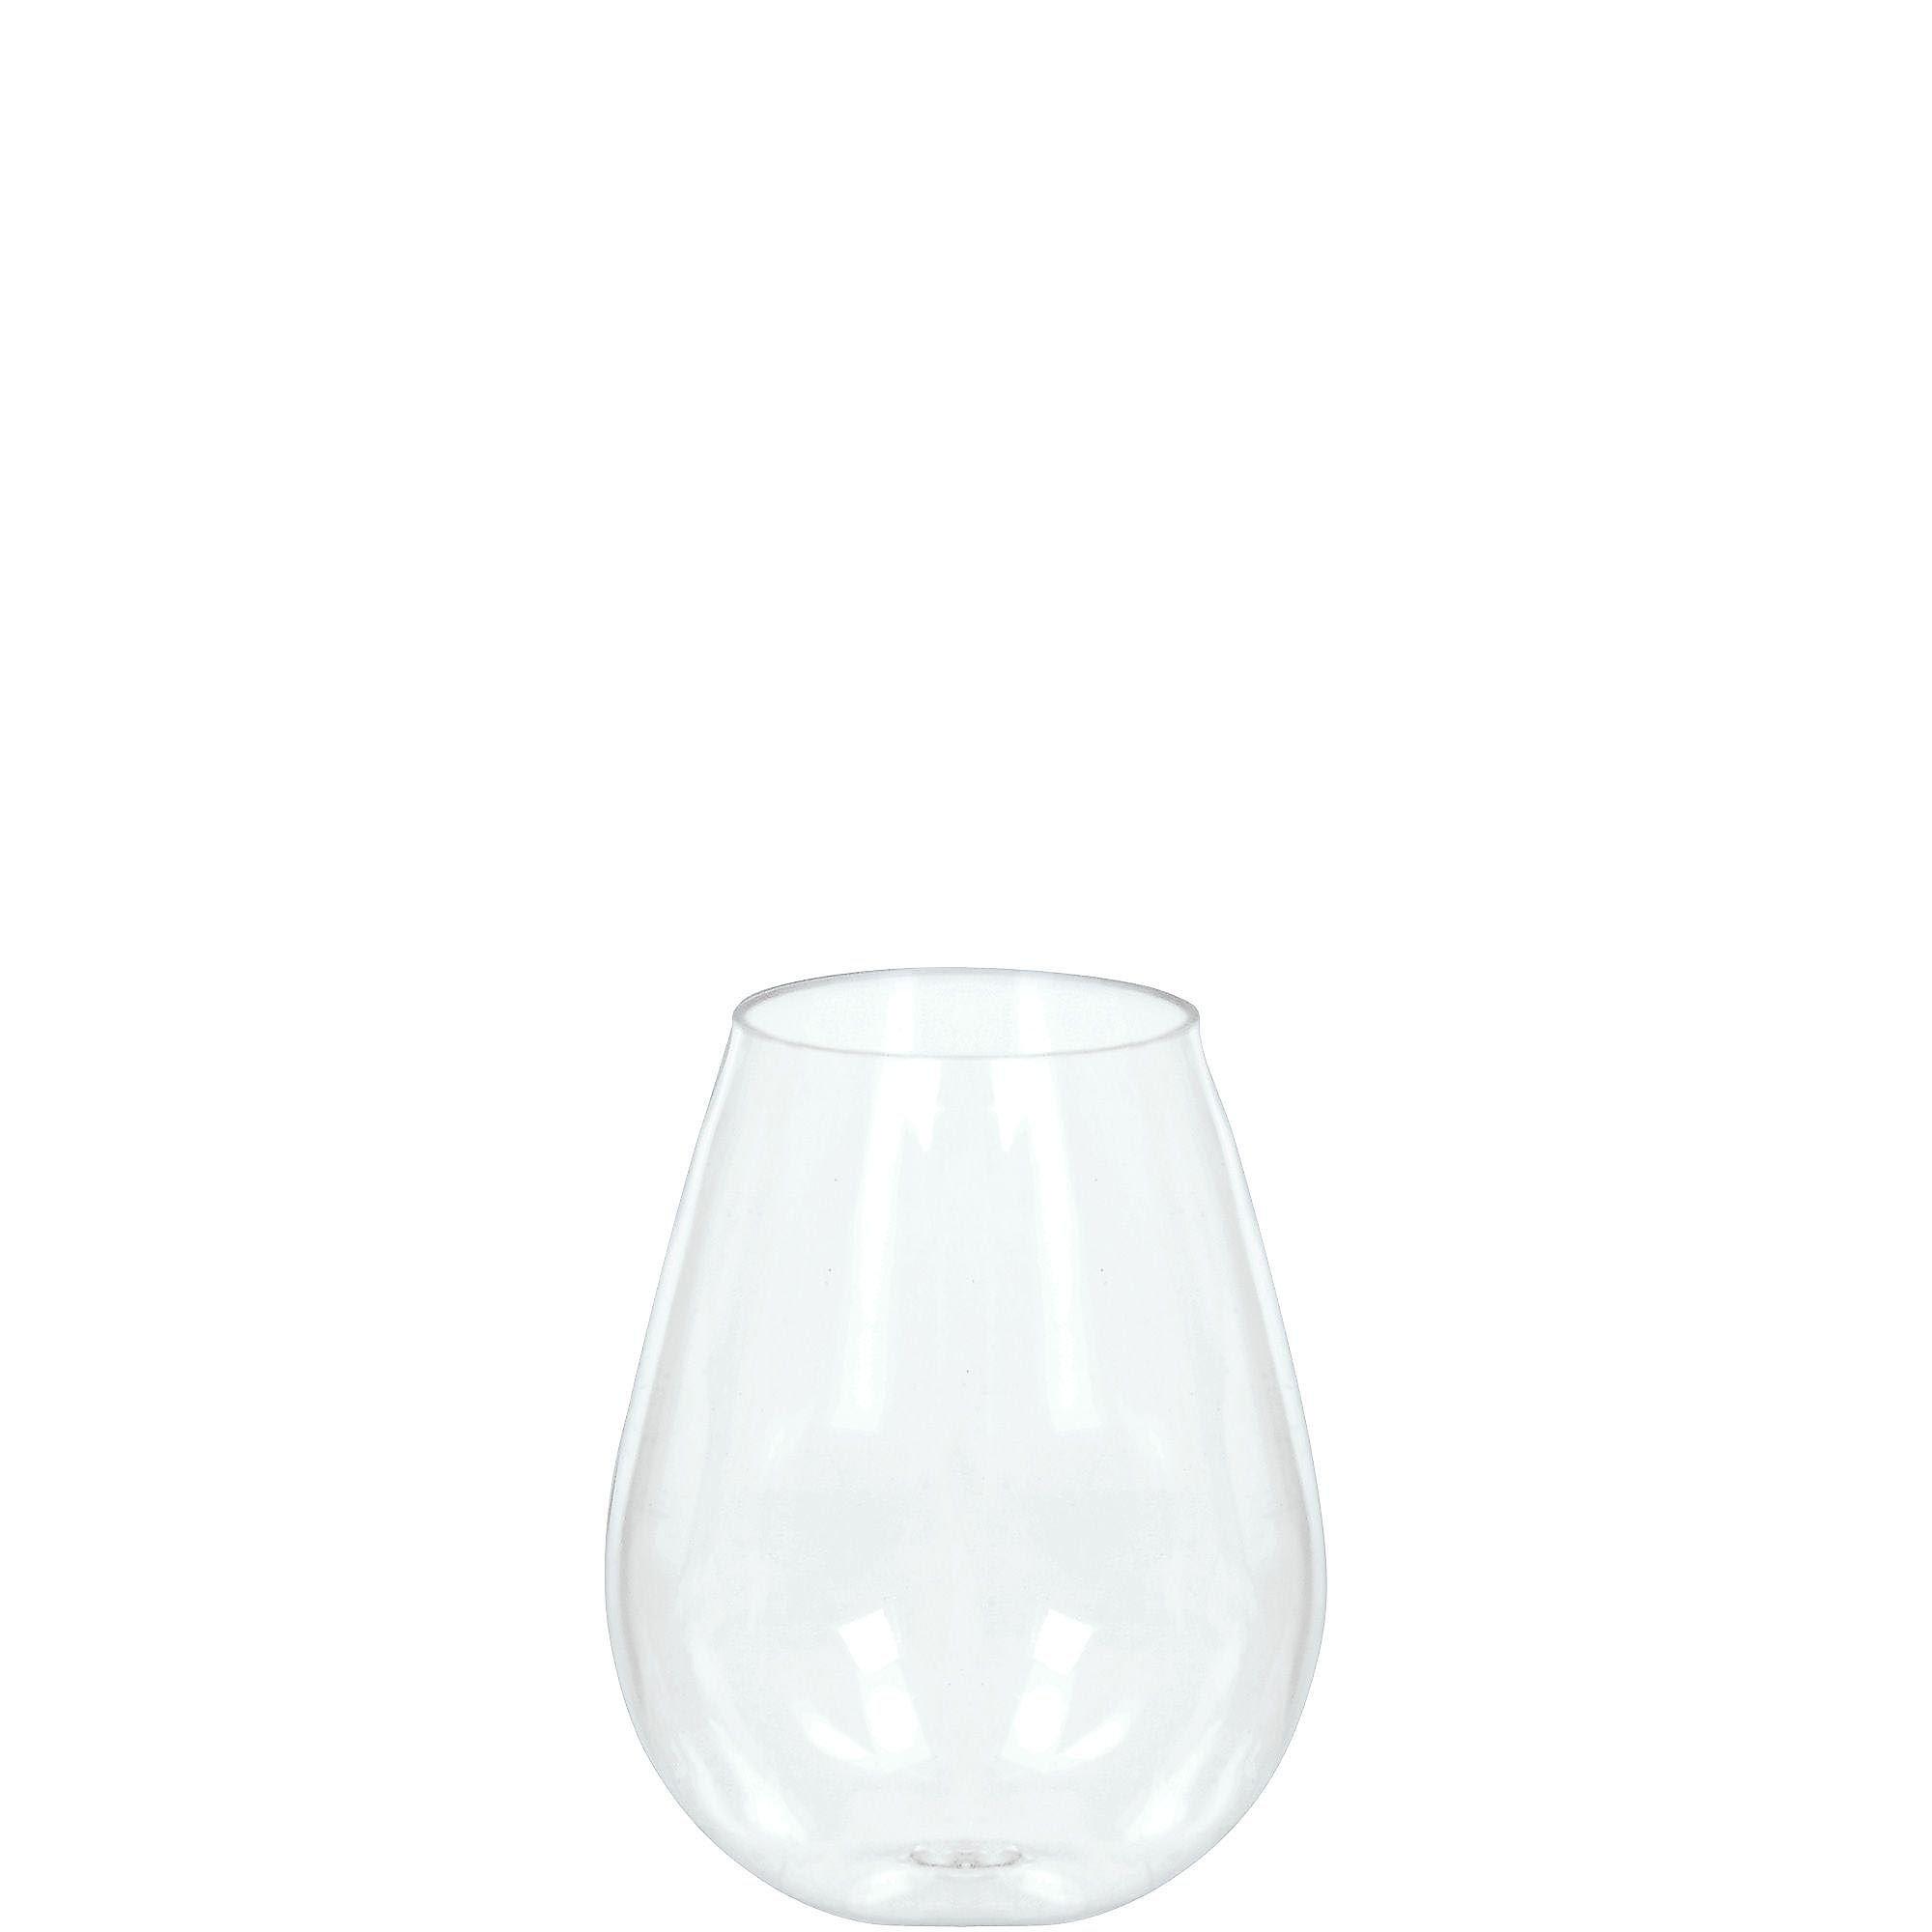 Mini Clear Plastic Stemless Wine Glasses 10ct 